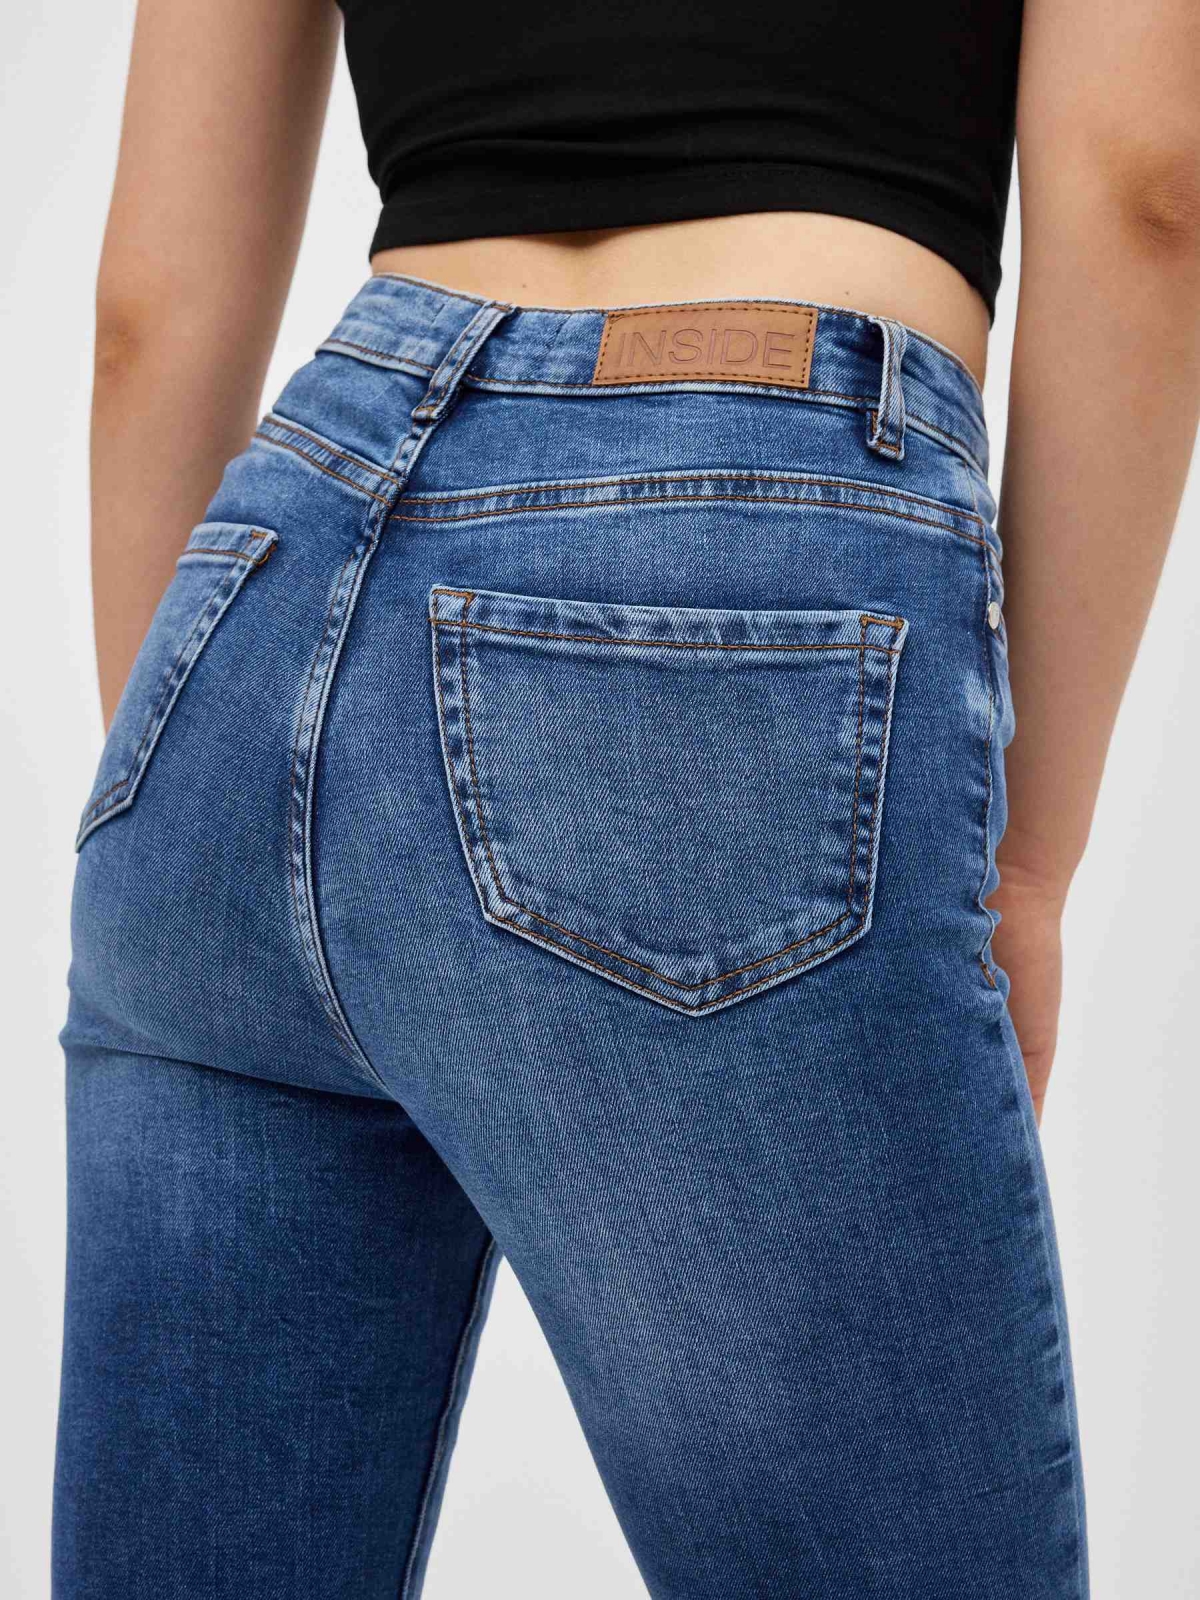 Denim skinny jeans blue detail view